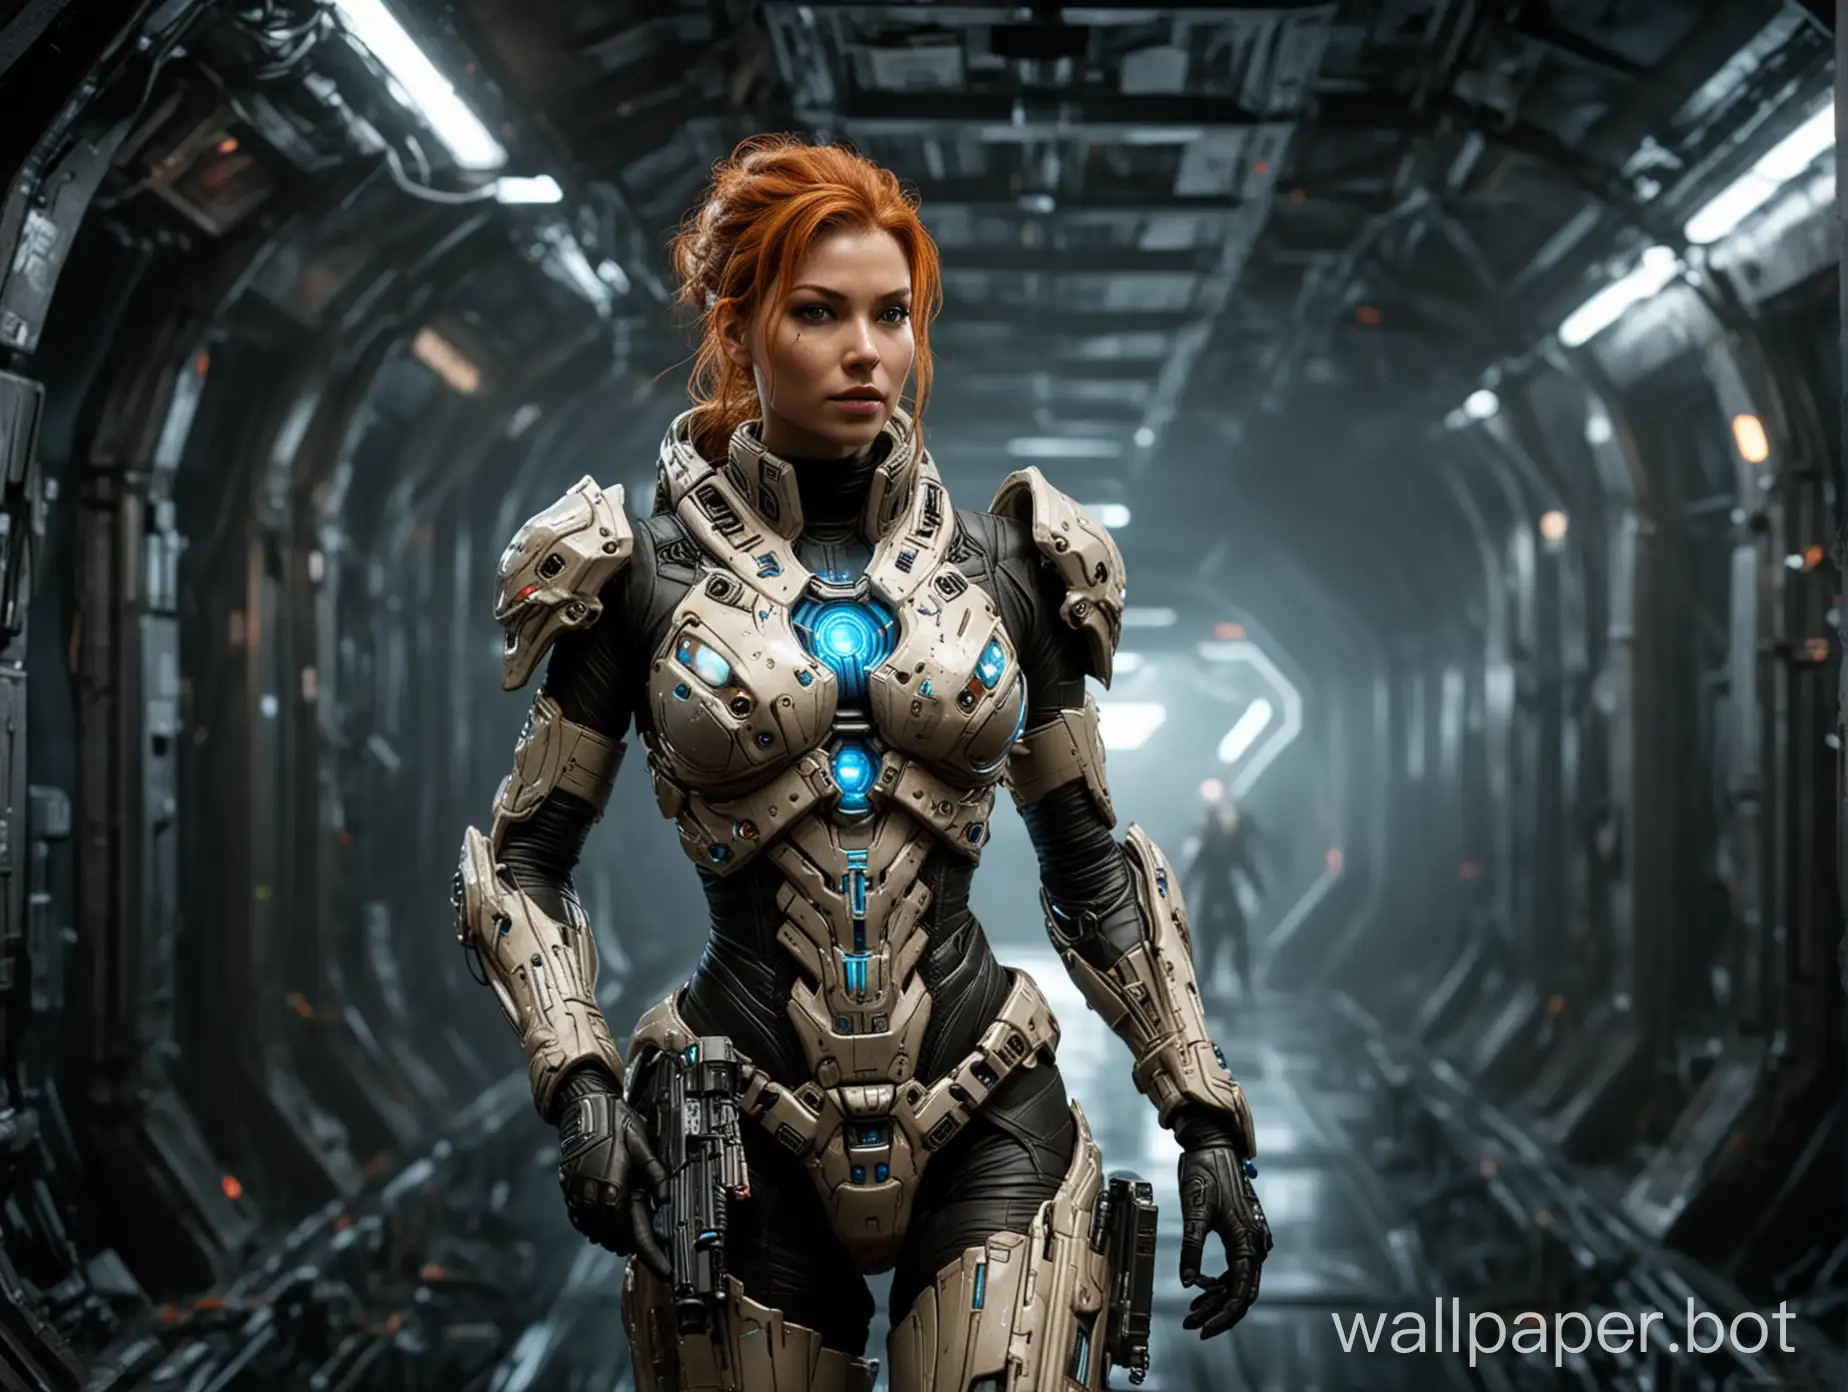 Futuristic-Space-Warrior-Sarah-Kerrigan-Wielding-Laser-Gun-in-Dark-Spaceship-Corridor